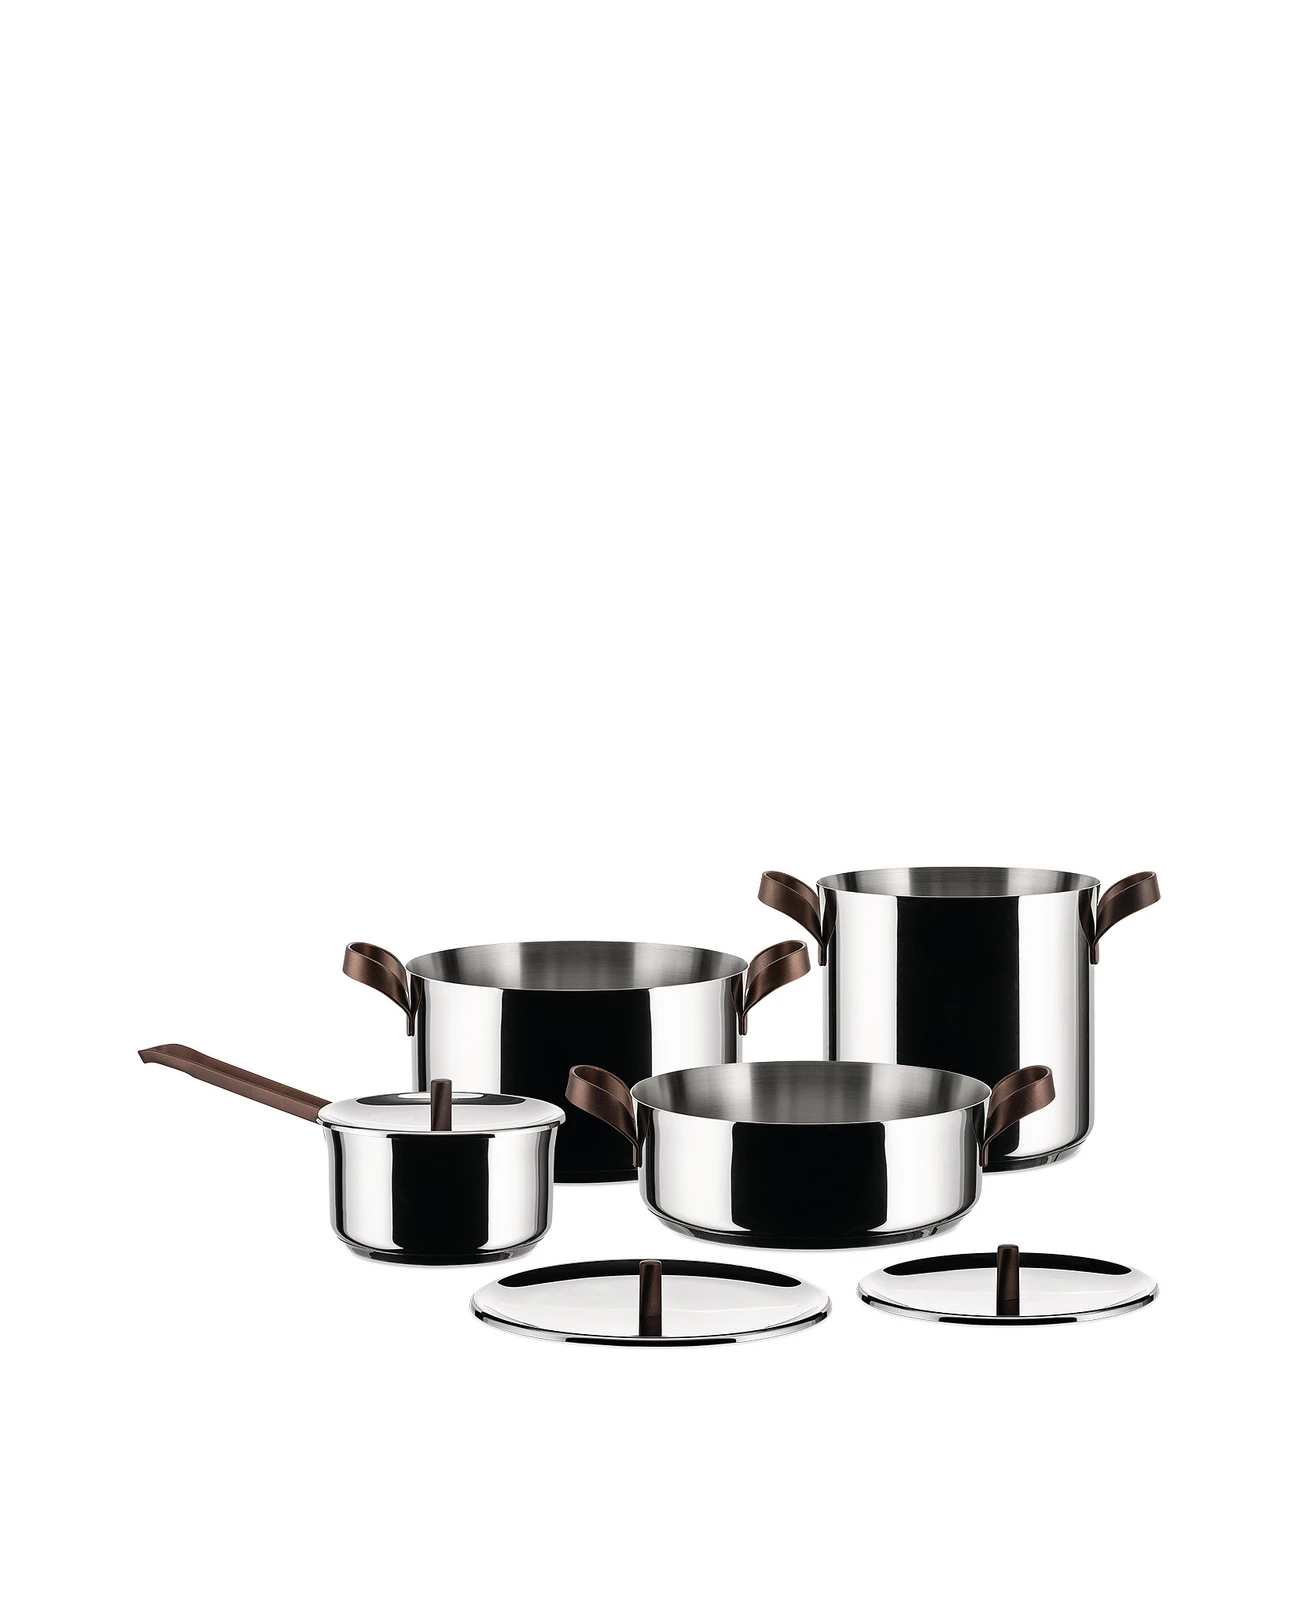 Alessi Edo Set of 7 saucepans, Handles in 18/10 Stainless Steel